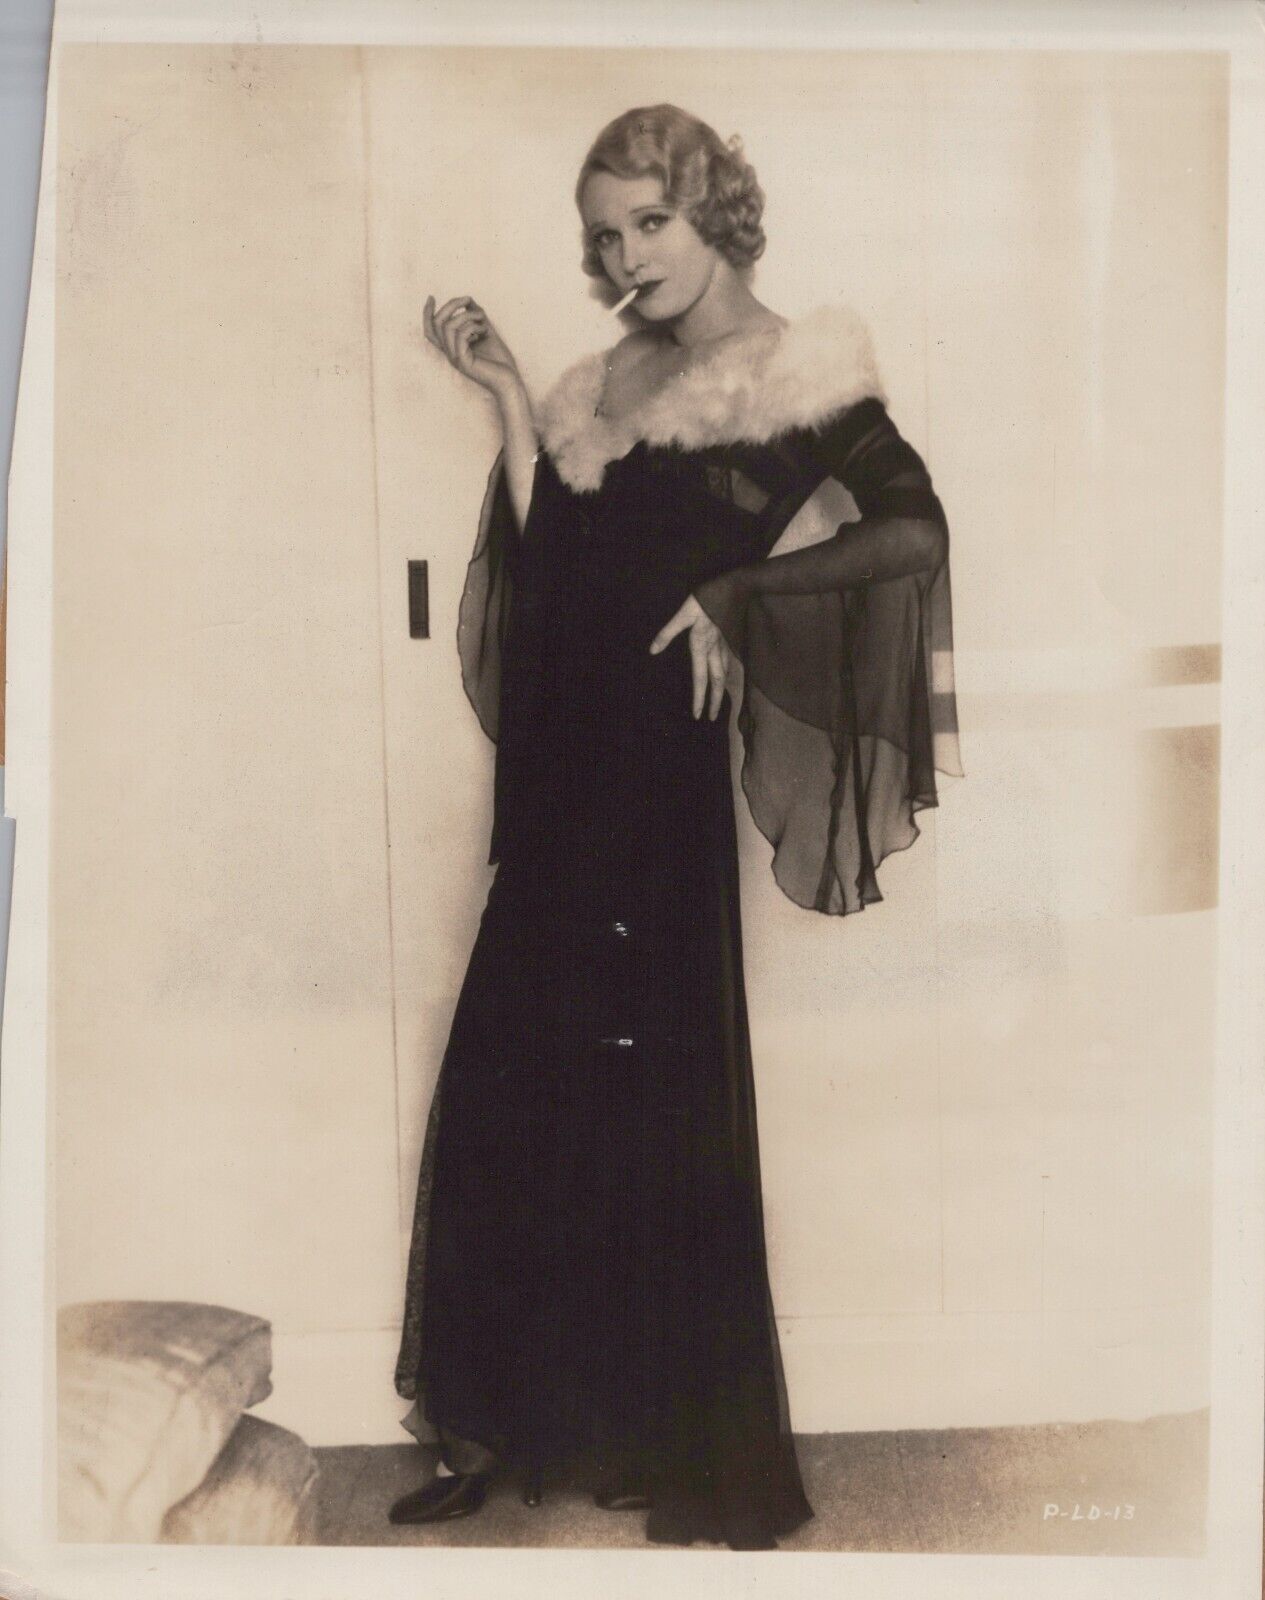 Lili Damita (1930s) ❤🎬 Stylish Glamorous Pose - Original Vintage Photo K 209